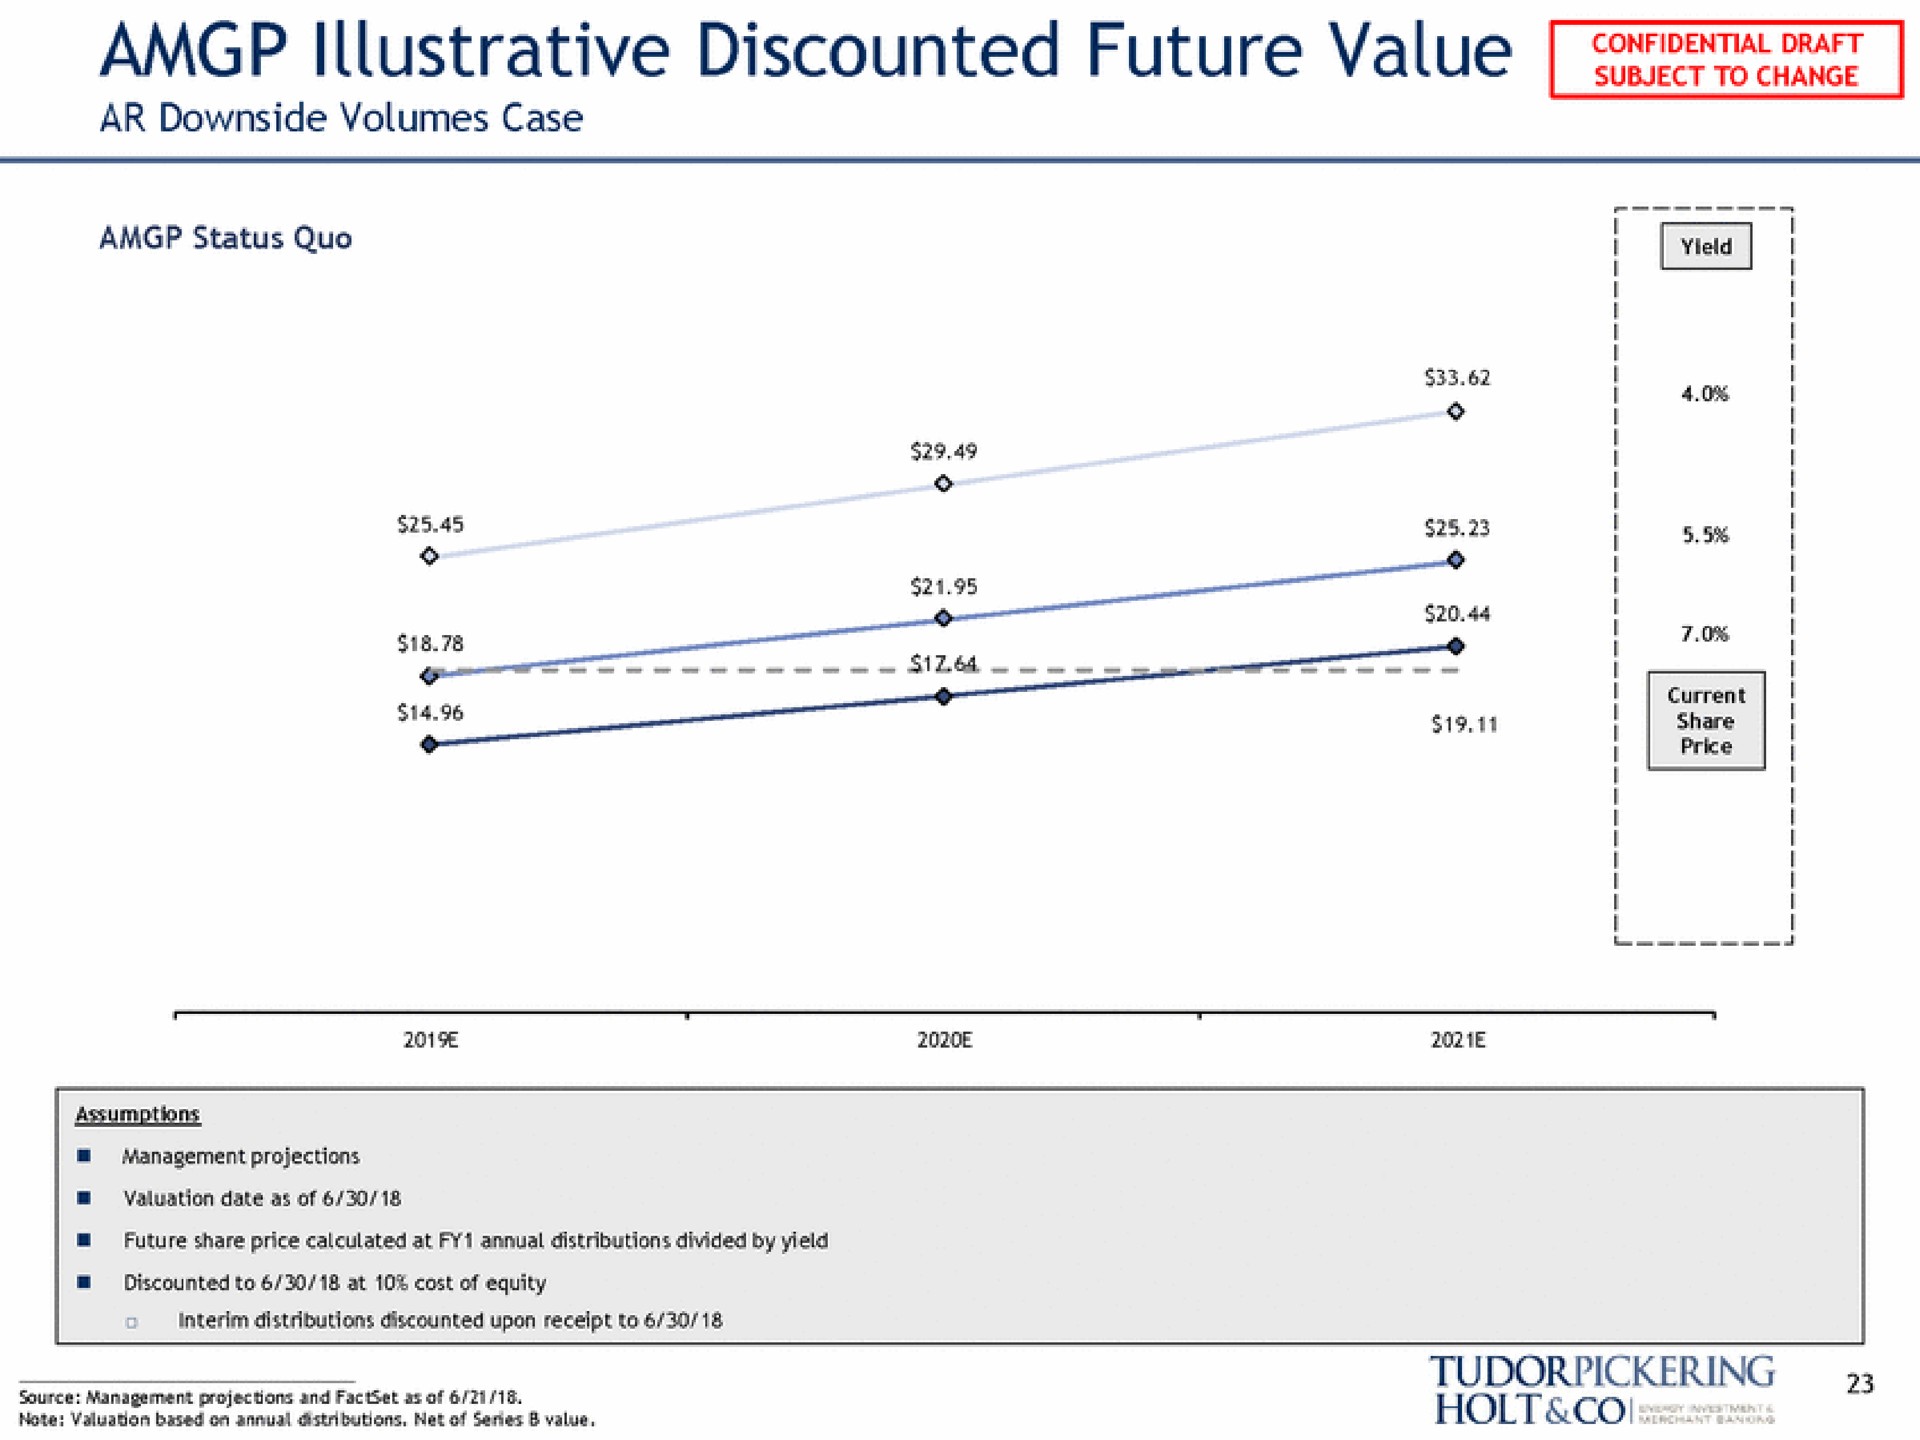 illustrative discounted future value holt a | Tudor, Pickering, Holt & Co